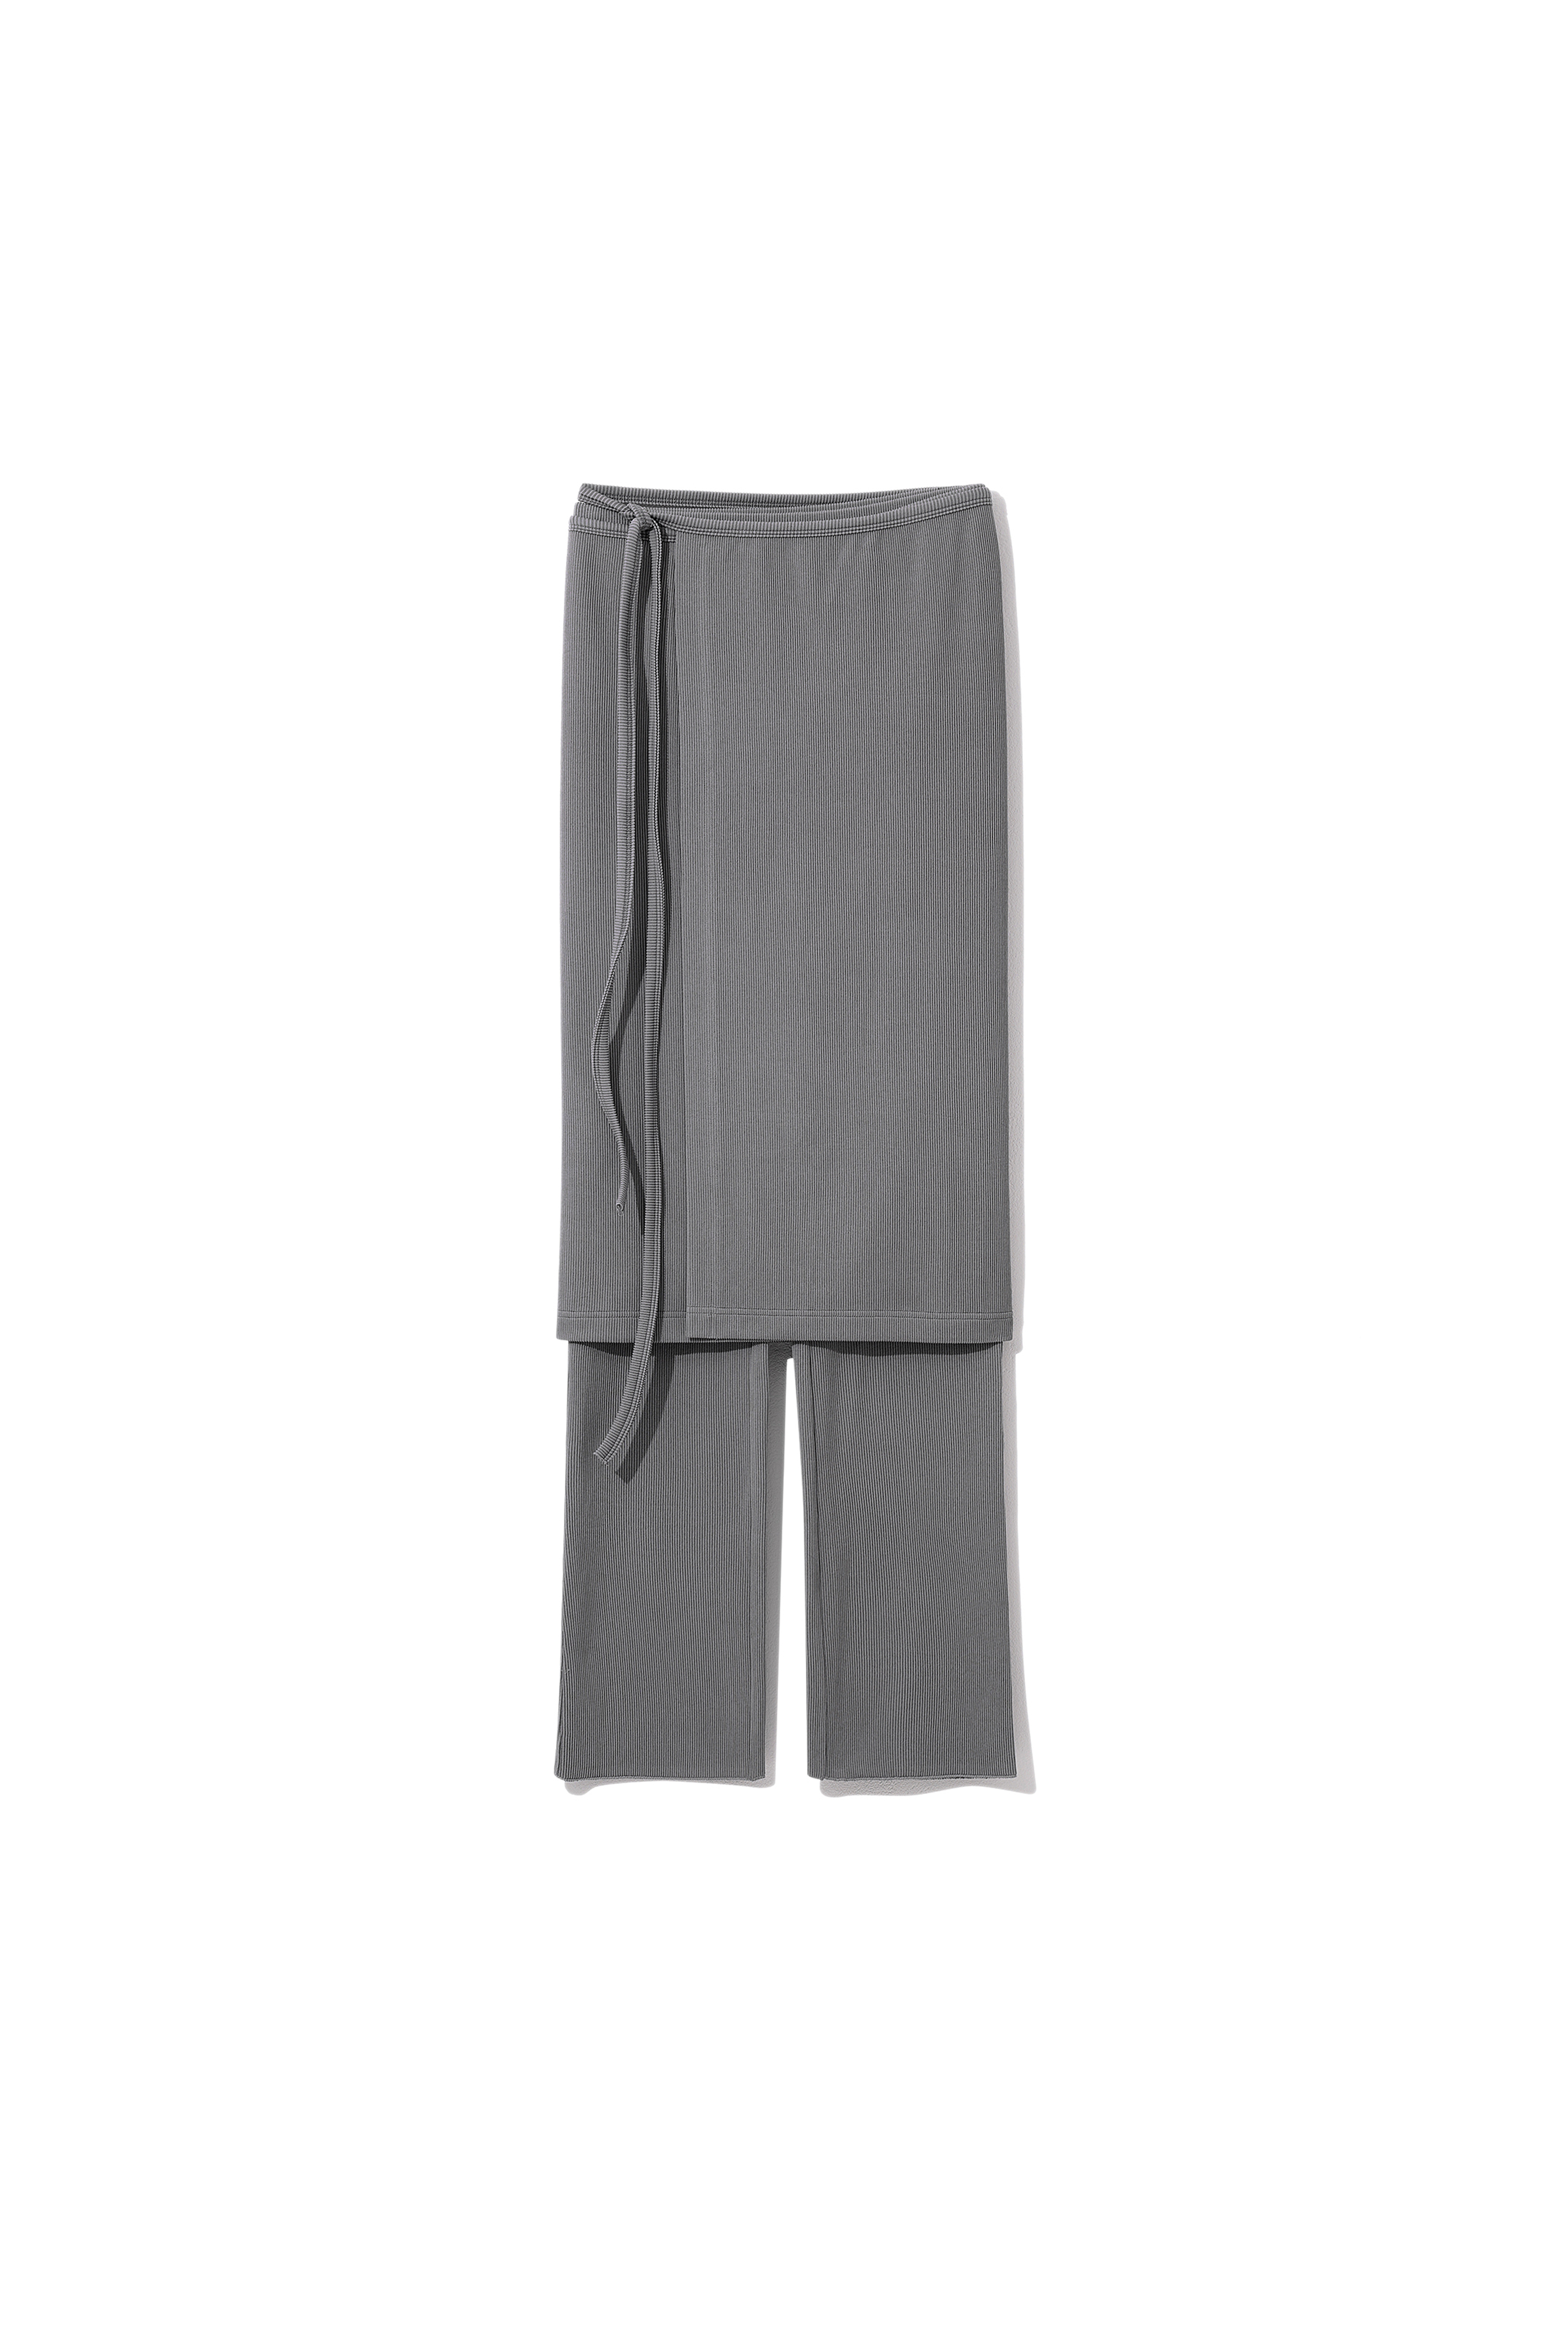 Lulu Wrap Pants Grey [25% OFF, 09.18(MON) - 09.22(FRI)]